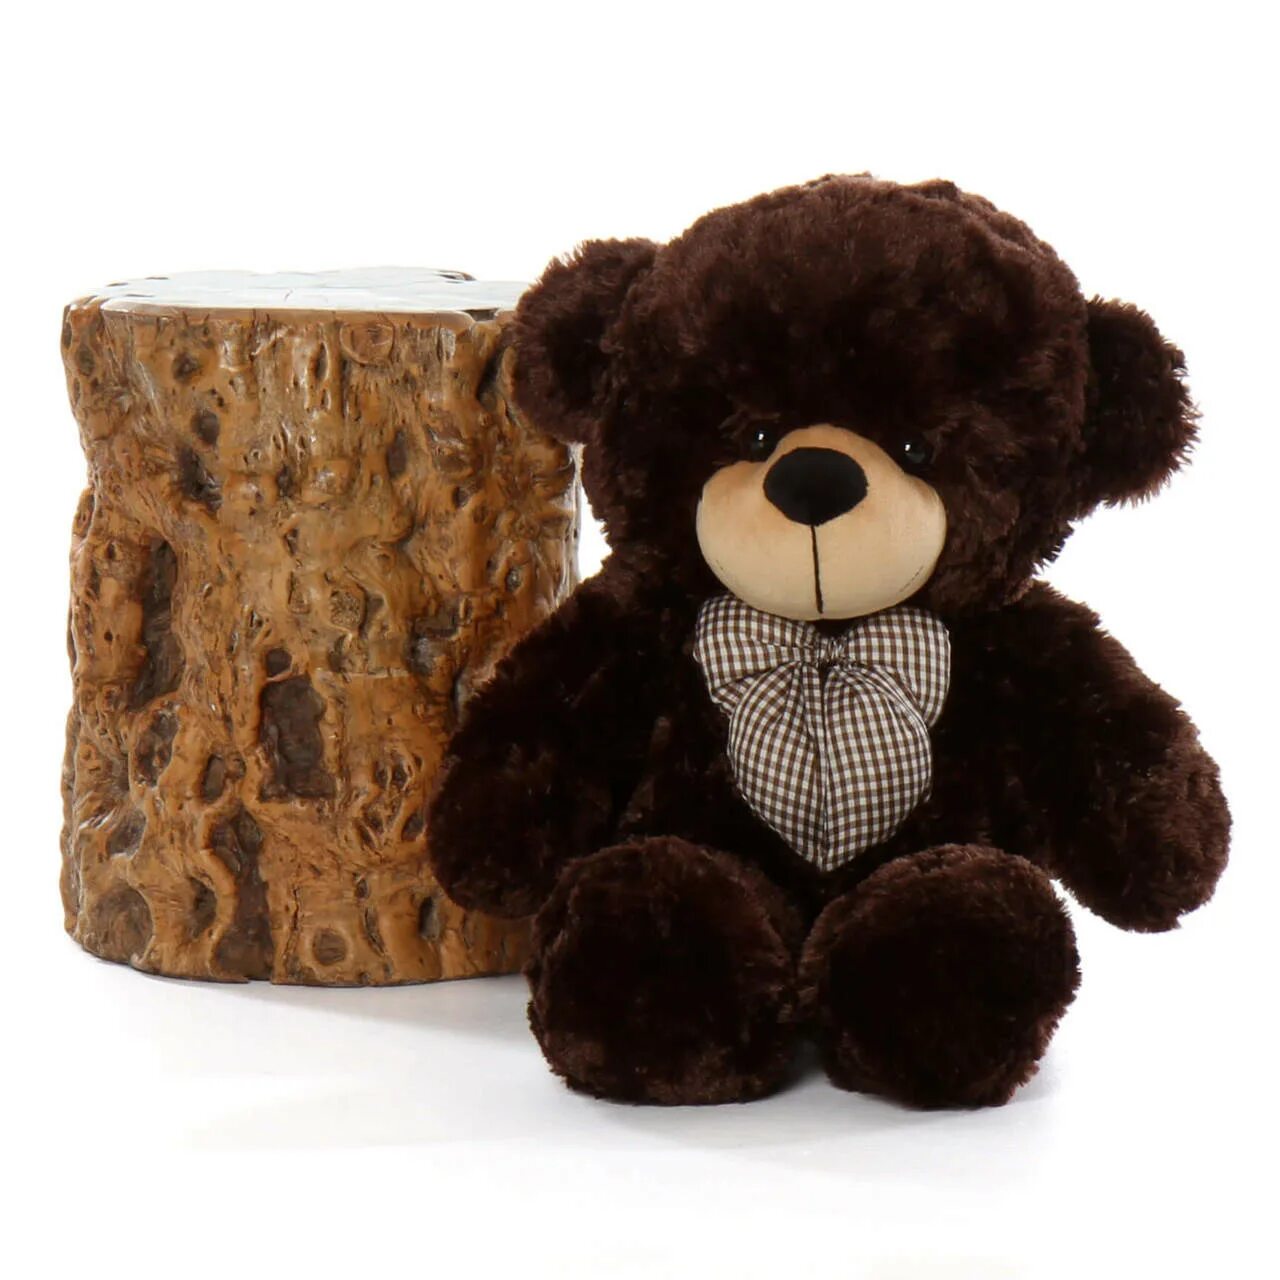 A brown teddy bear. Тедди Браун. Плюшевый мишка с шоколадкой. Teddy коричневый мишка с розой. Tony Brown Тедди.